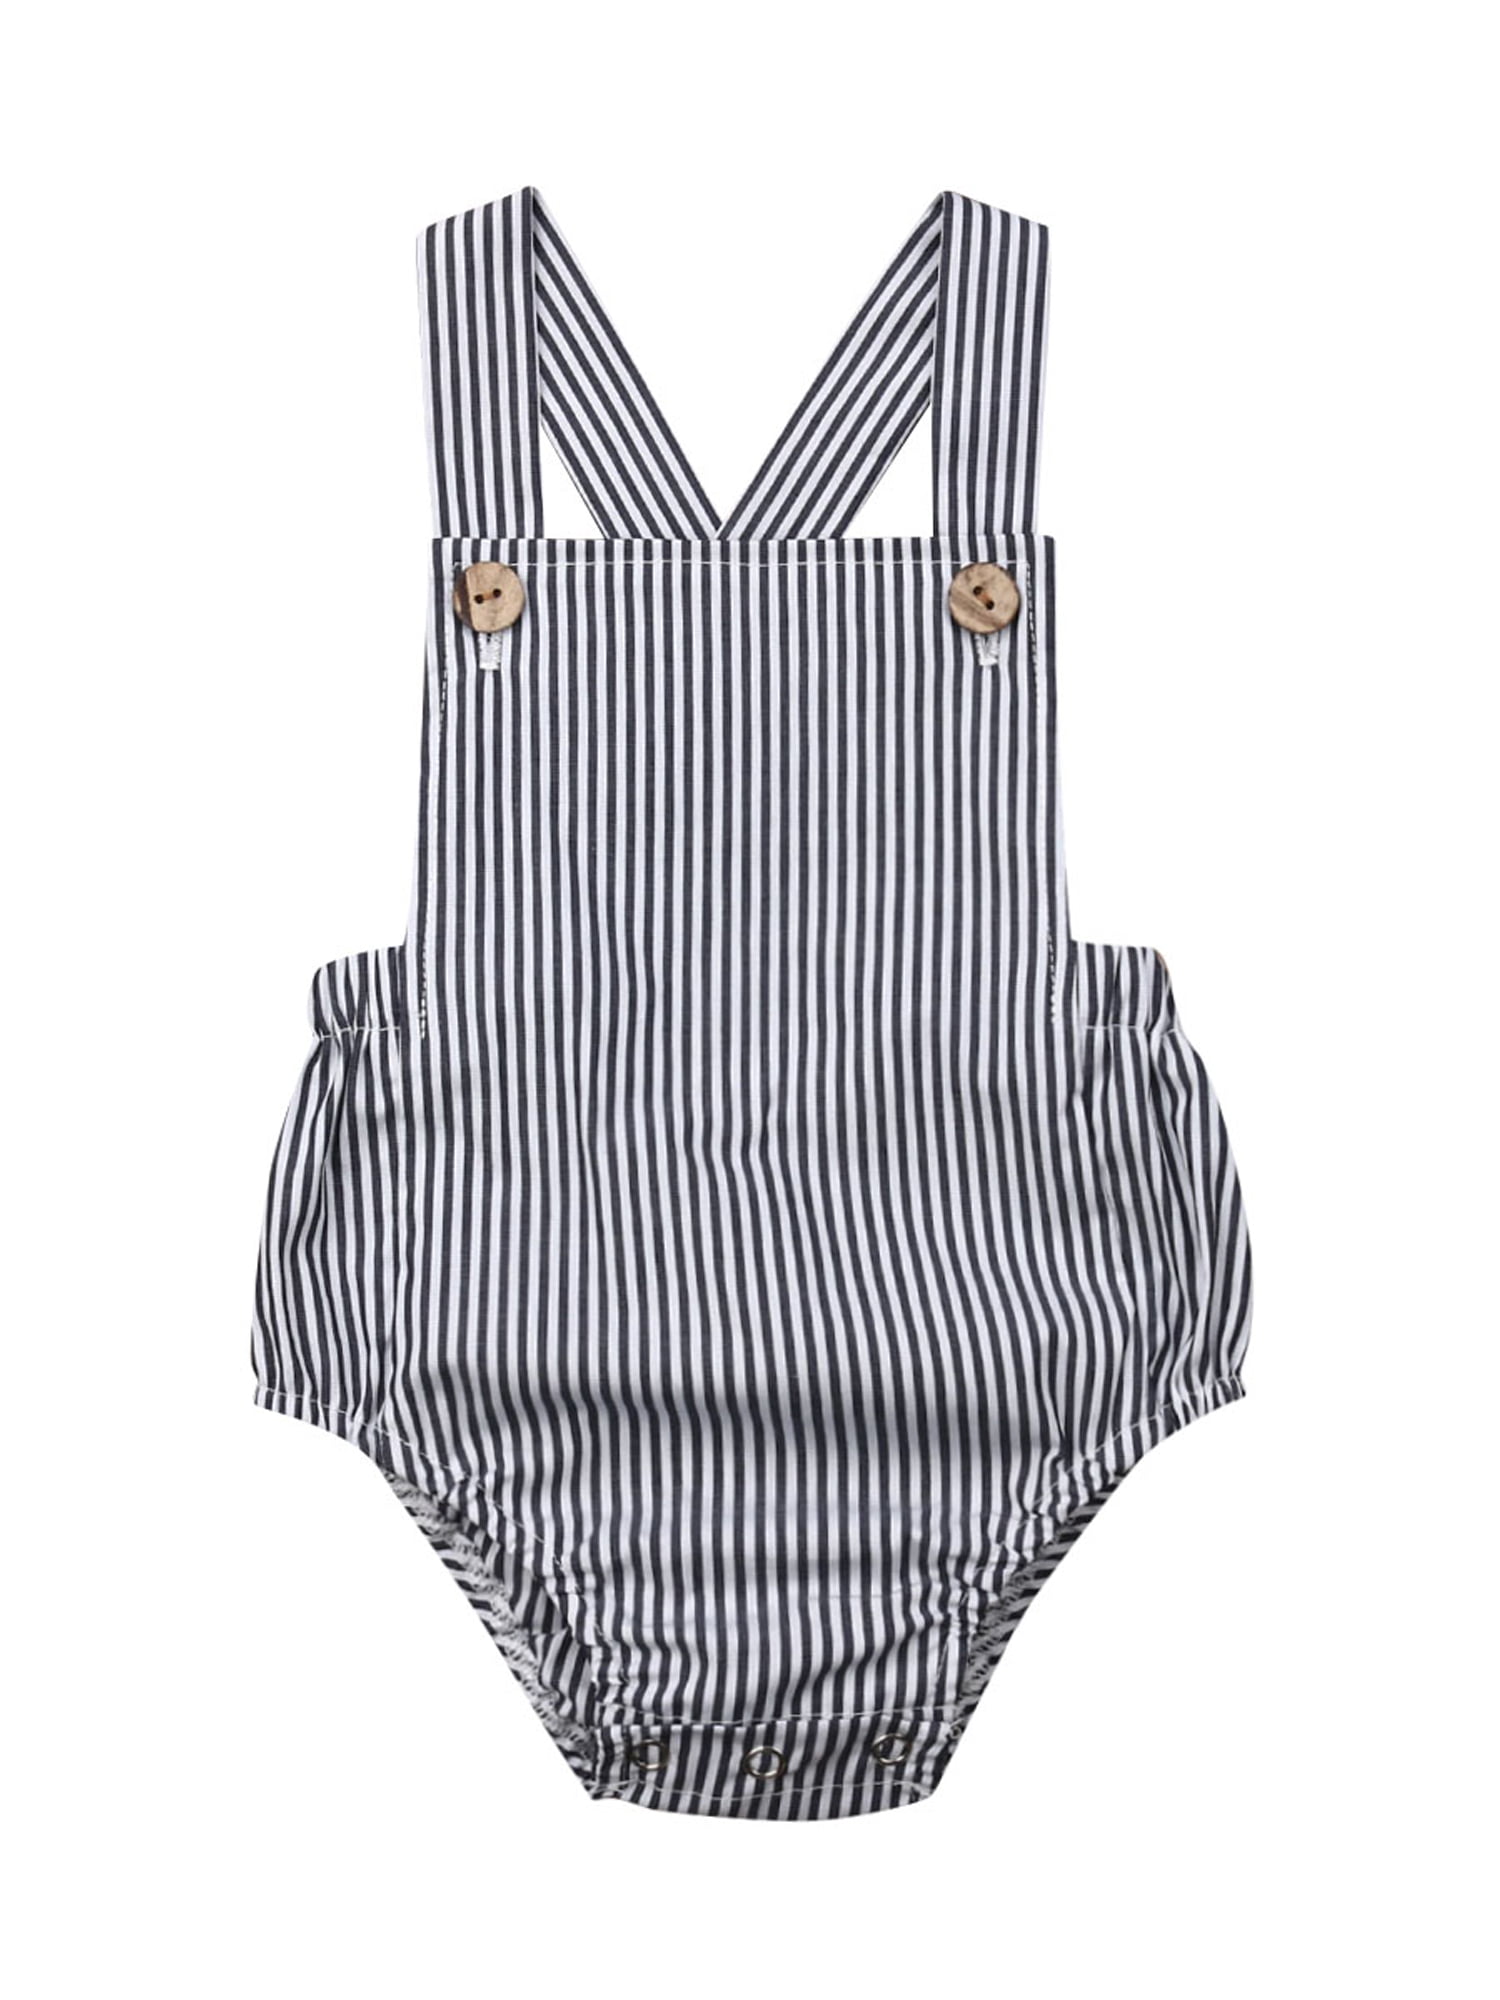 Summer Toddler Newborn Baby Boys Girl Romper Jumpsuit Playsuit Bodysuit Outfits 